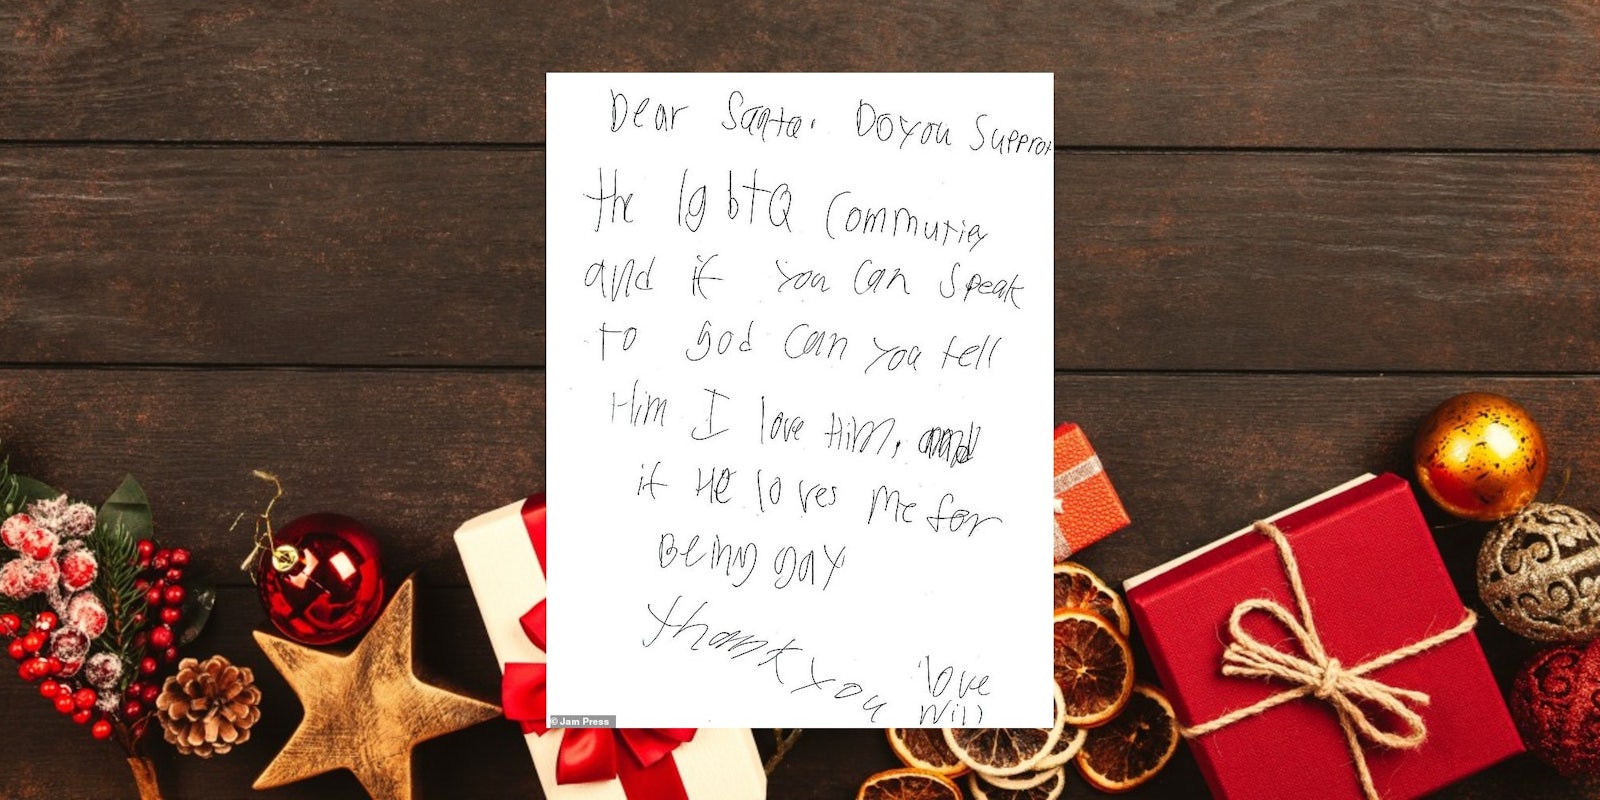 A letter written to Santa